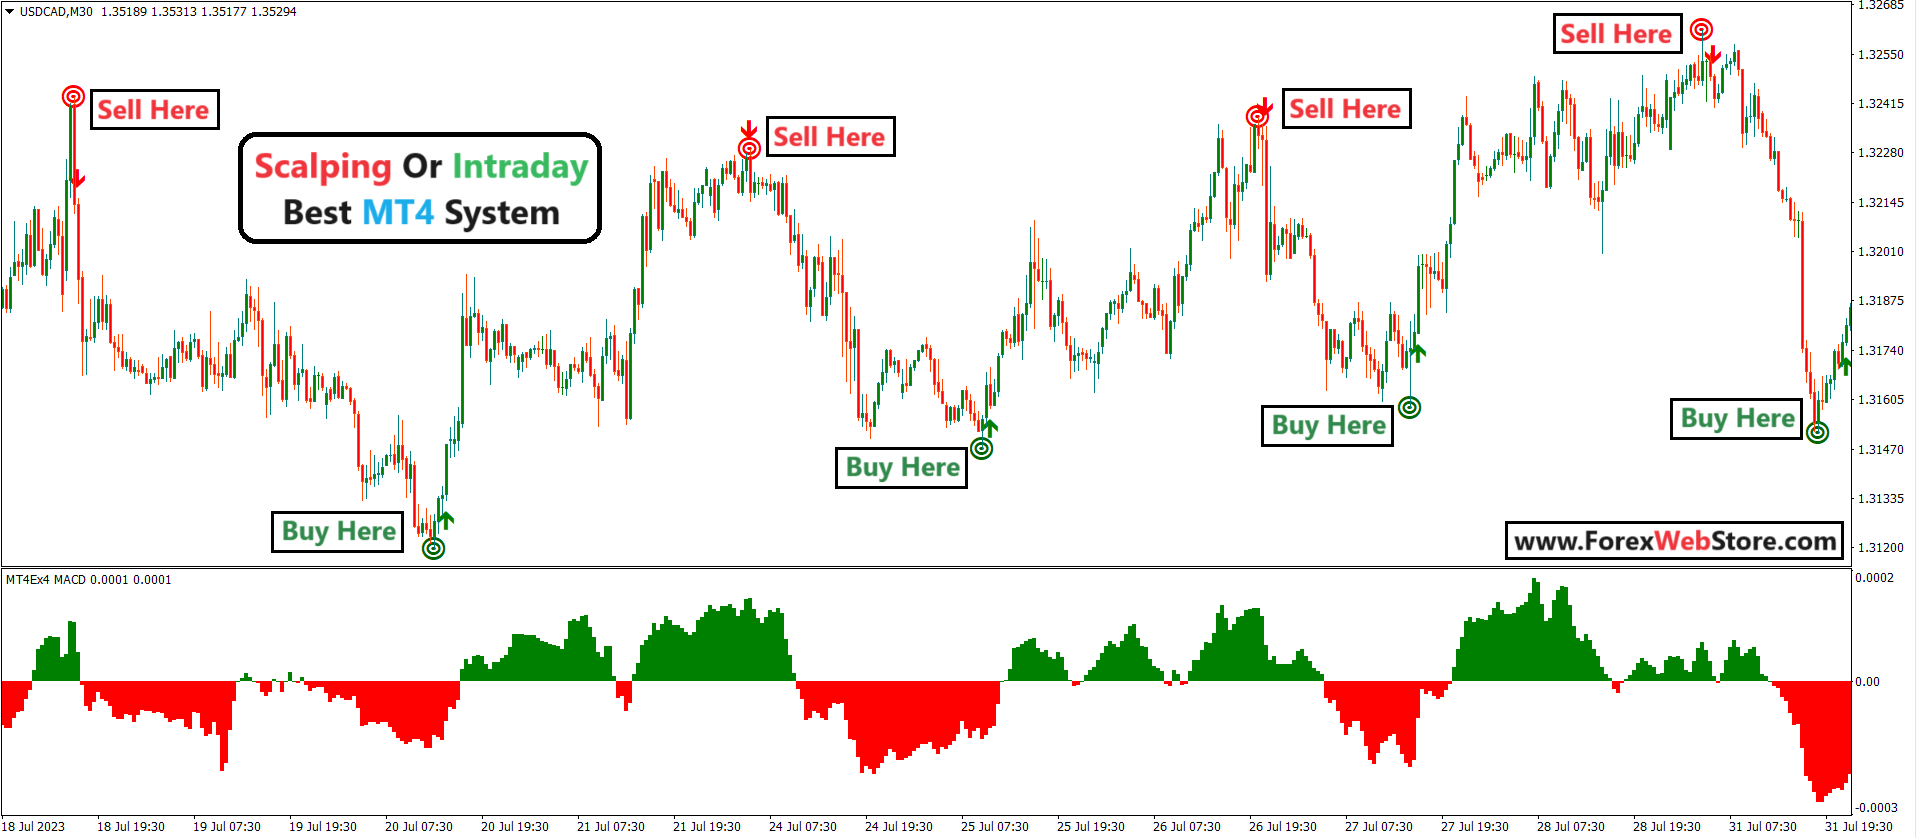 buy sell indicator in tradingview indiator arrow